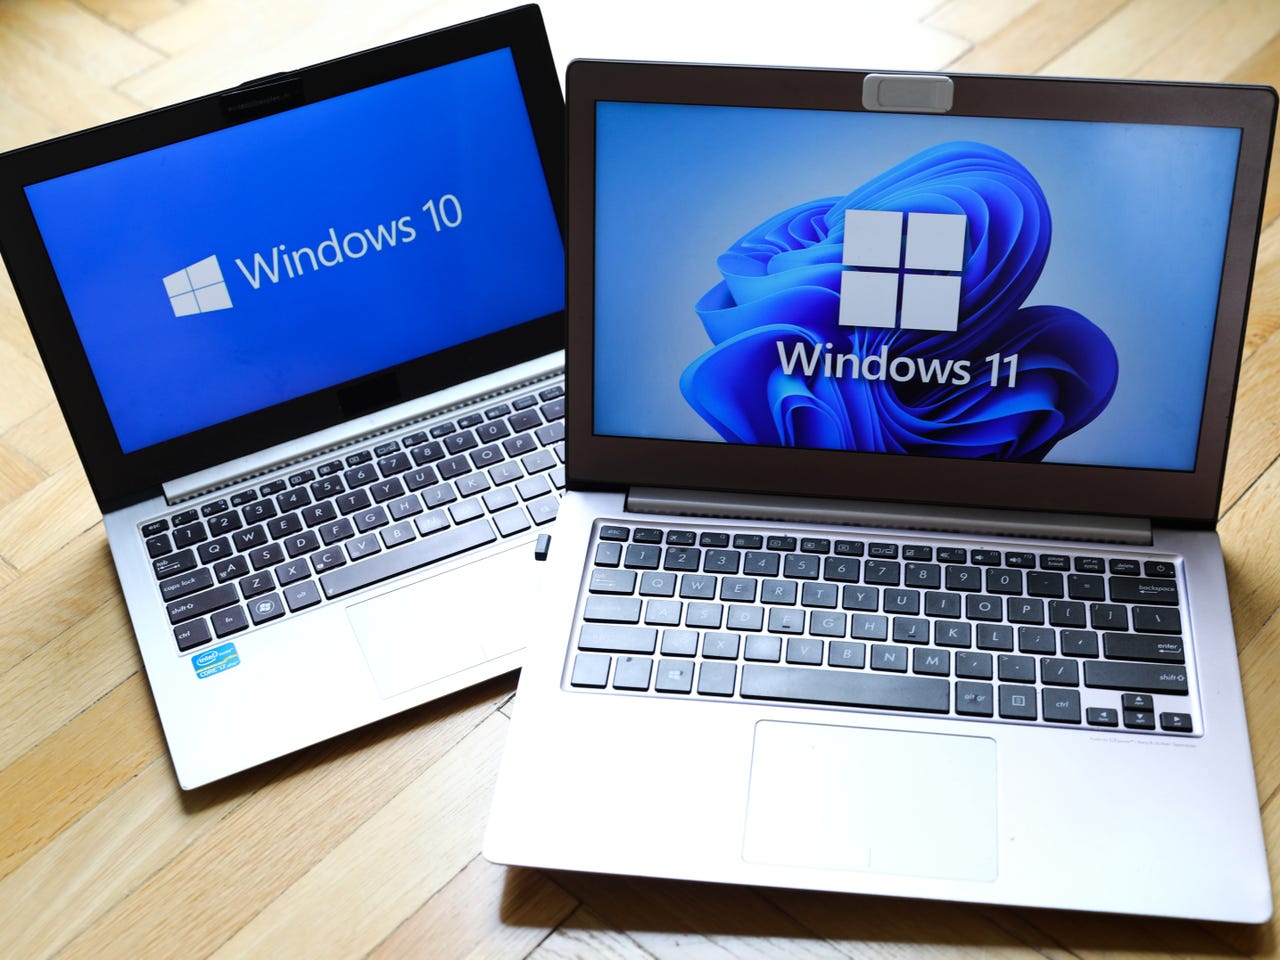 Windows 10 and Windows 11 logos on laptops